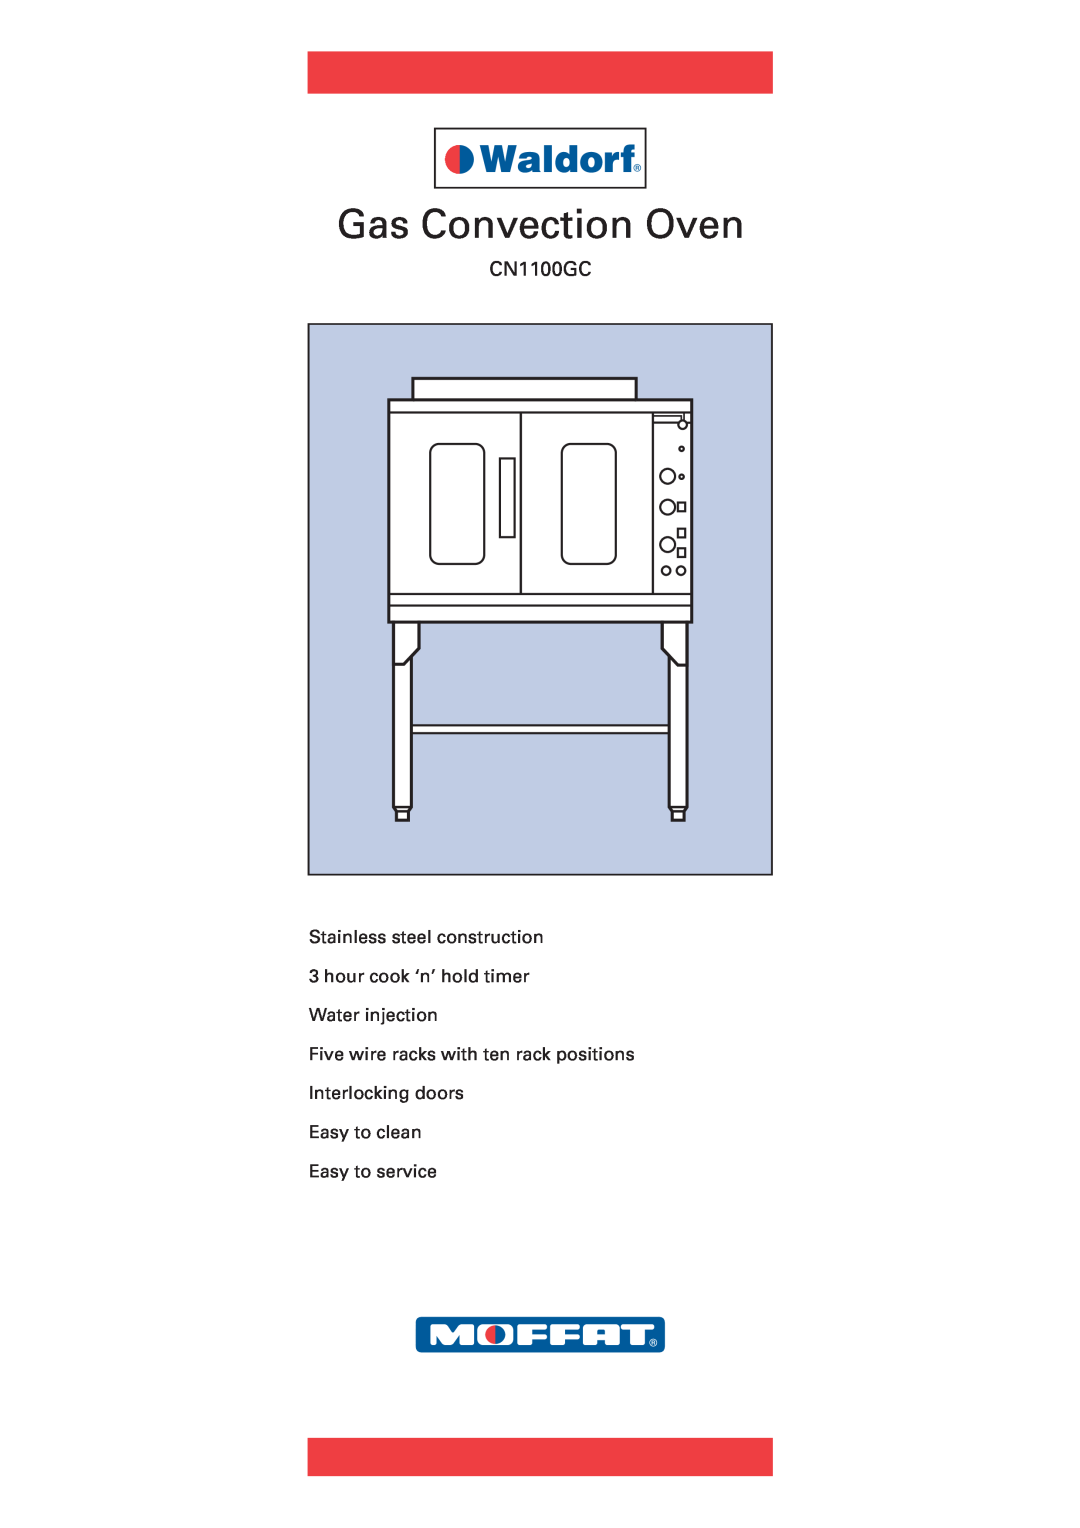 Moffat CN1100GC manual Gas Convection Oven, Five wire racks with ten rack positions Interlocking doors 